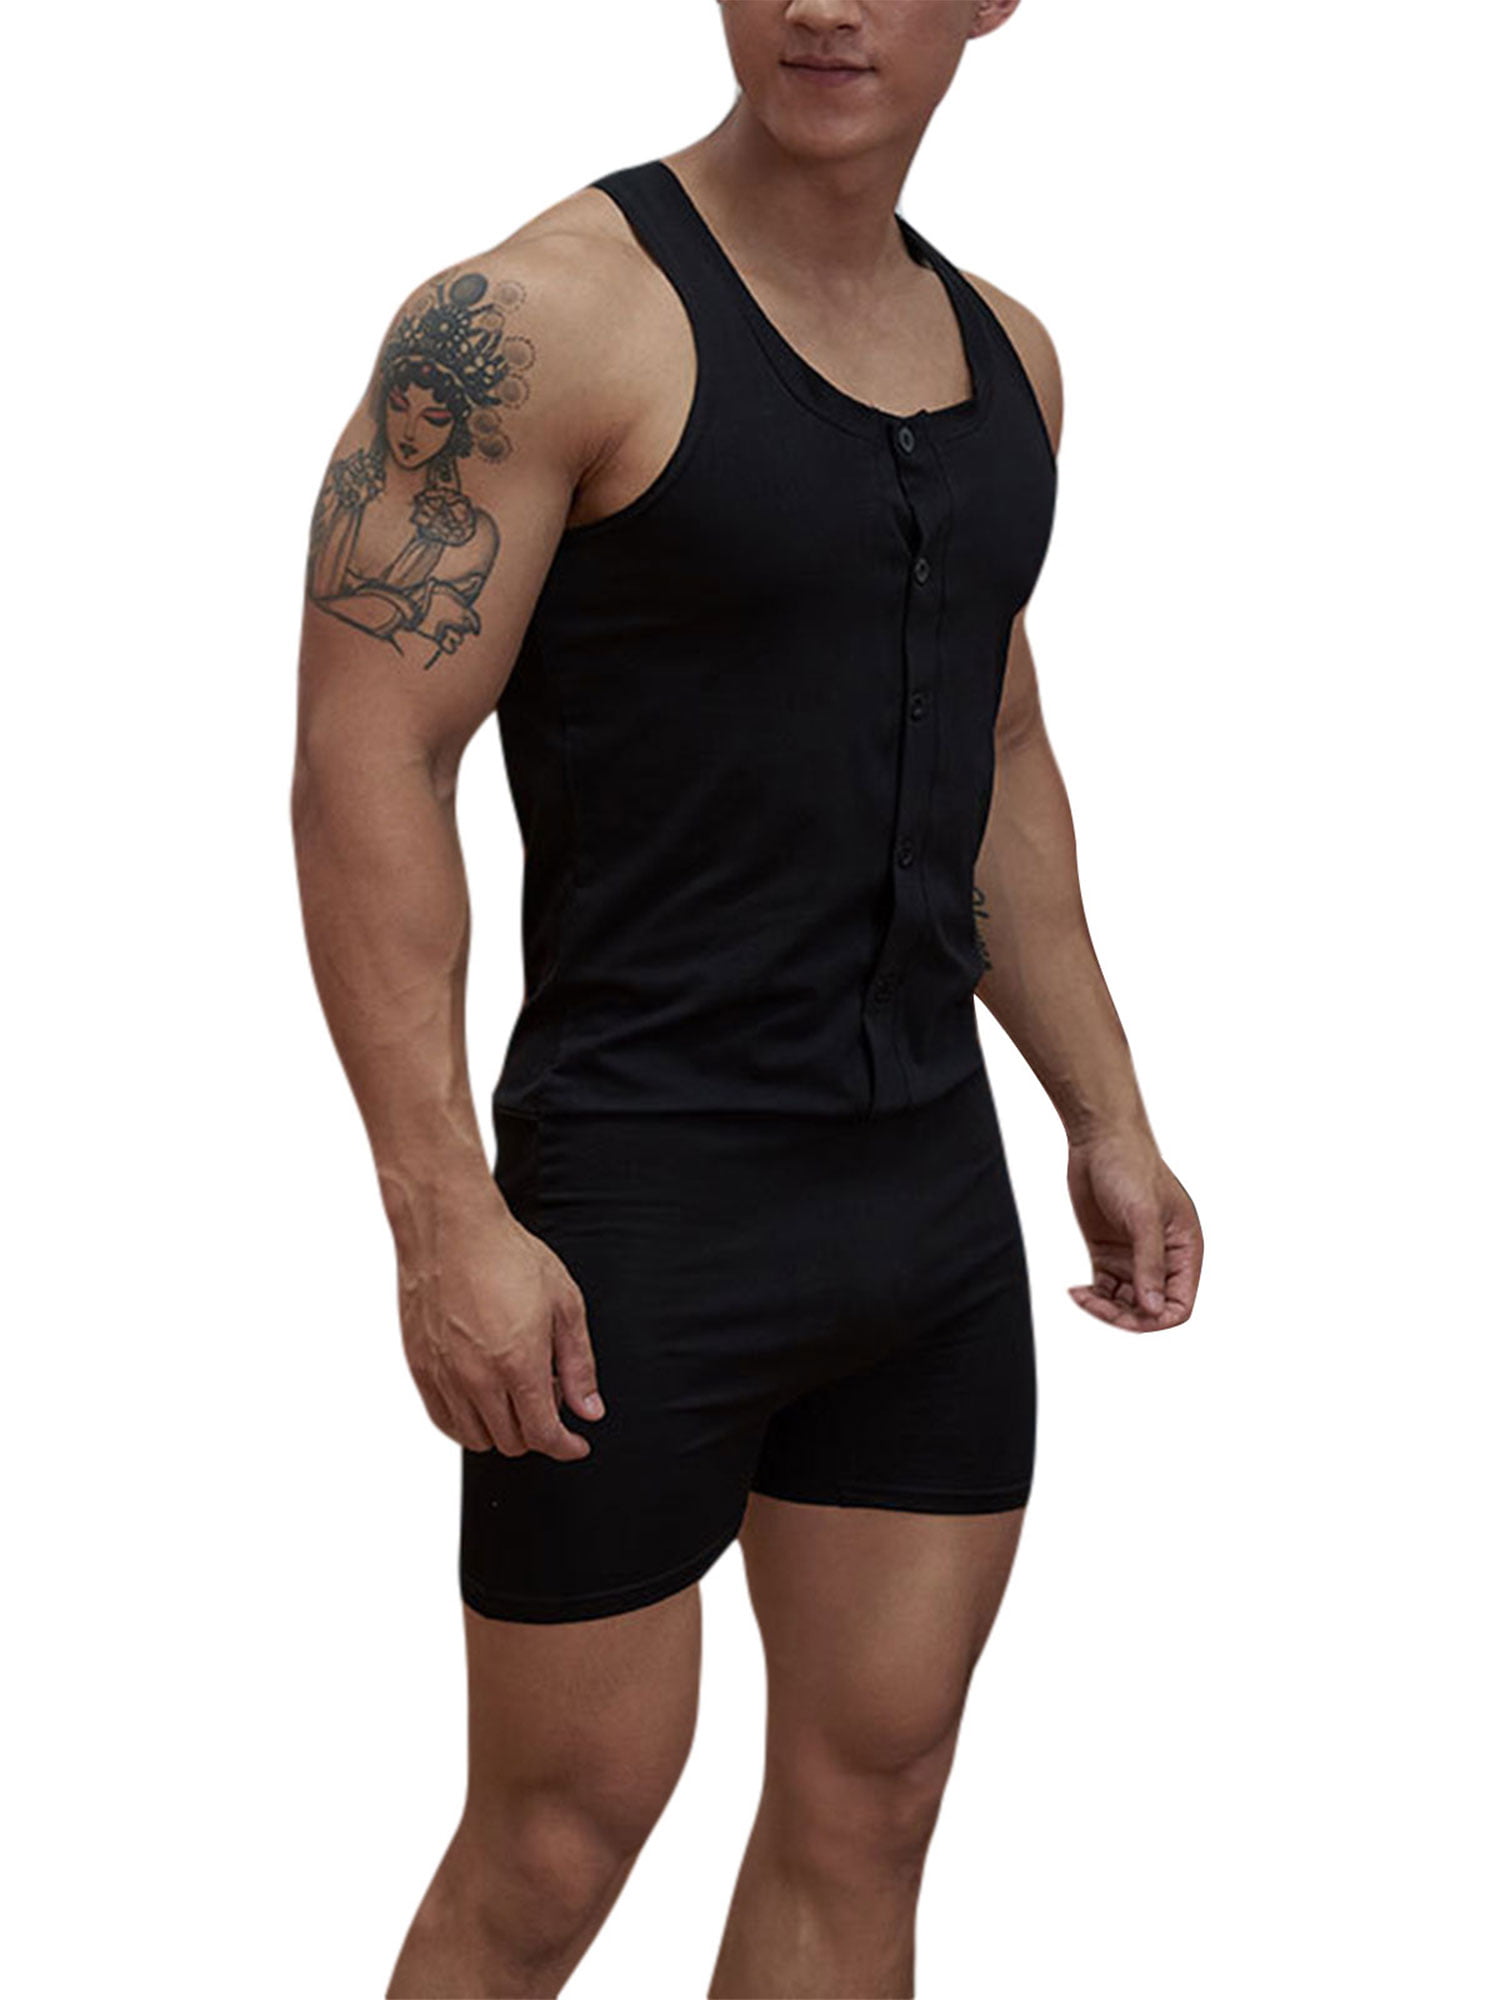 Men's Short Jumpsuit Sleeveless Tank Romper Button Front Pajamas Gym Workout Athletic Bodywear Singlet Underwear 